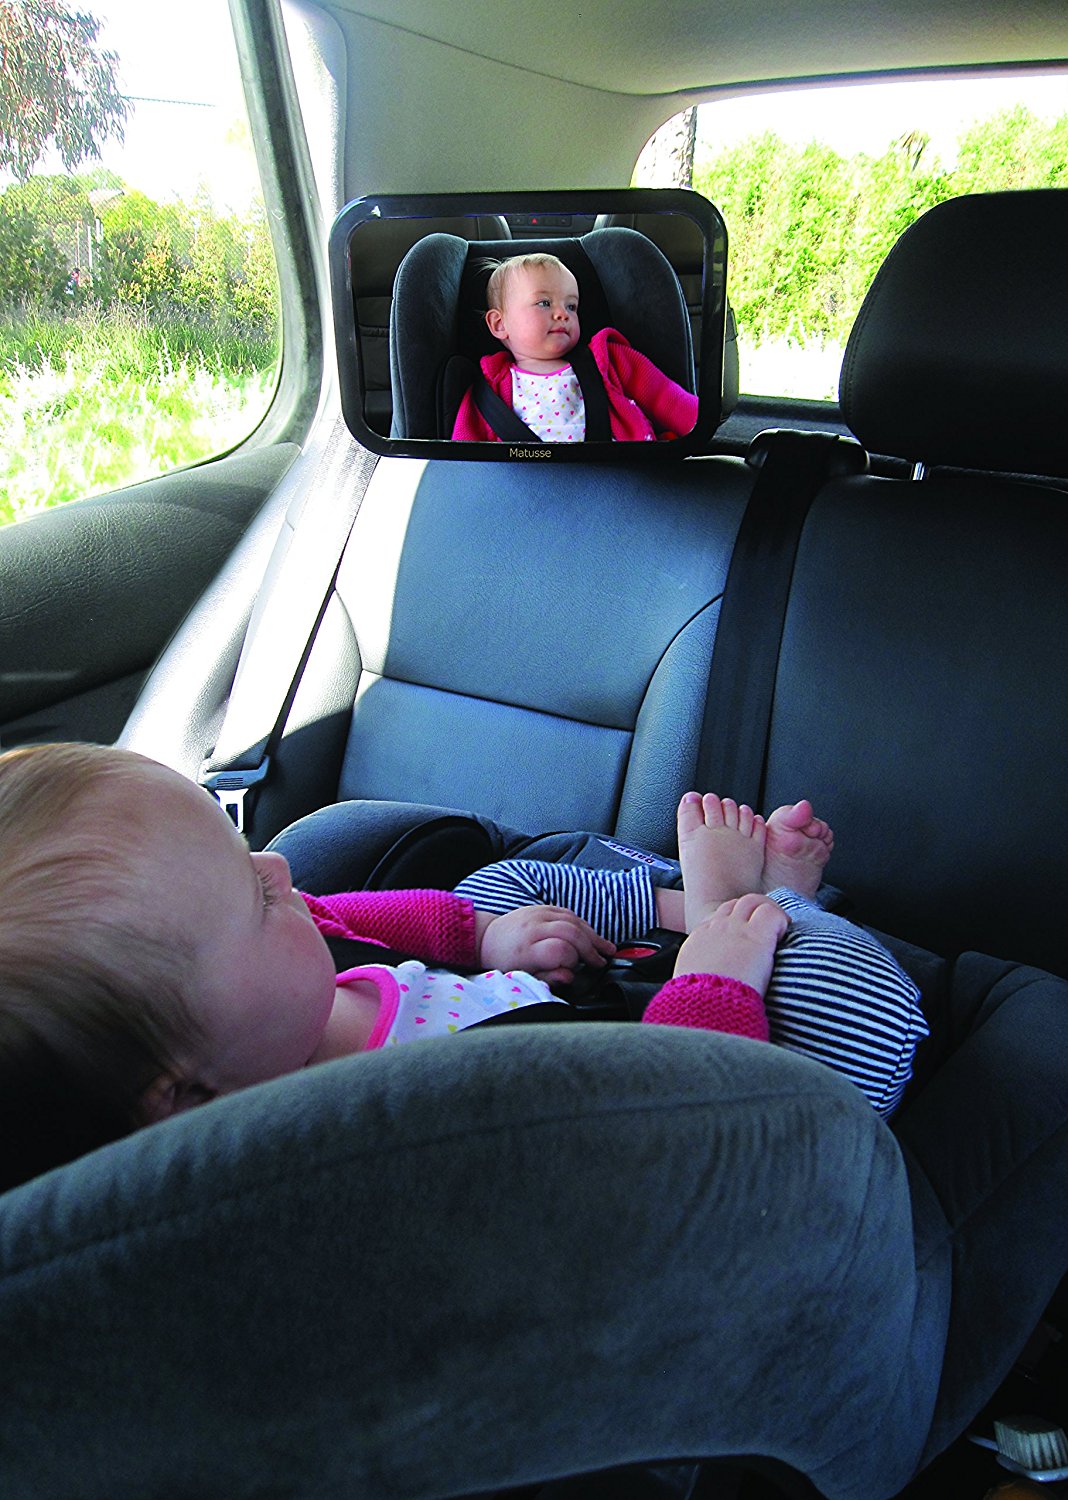 8 Best Baby Car Mirrors 2018 - Baby Rear Facing Car Seat Mirror Reviews